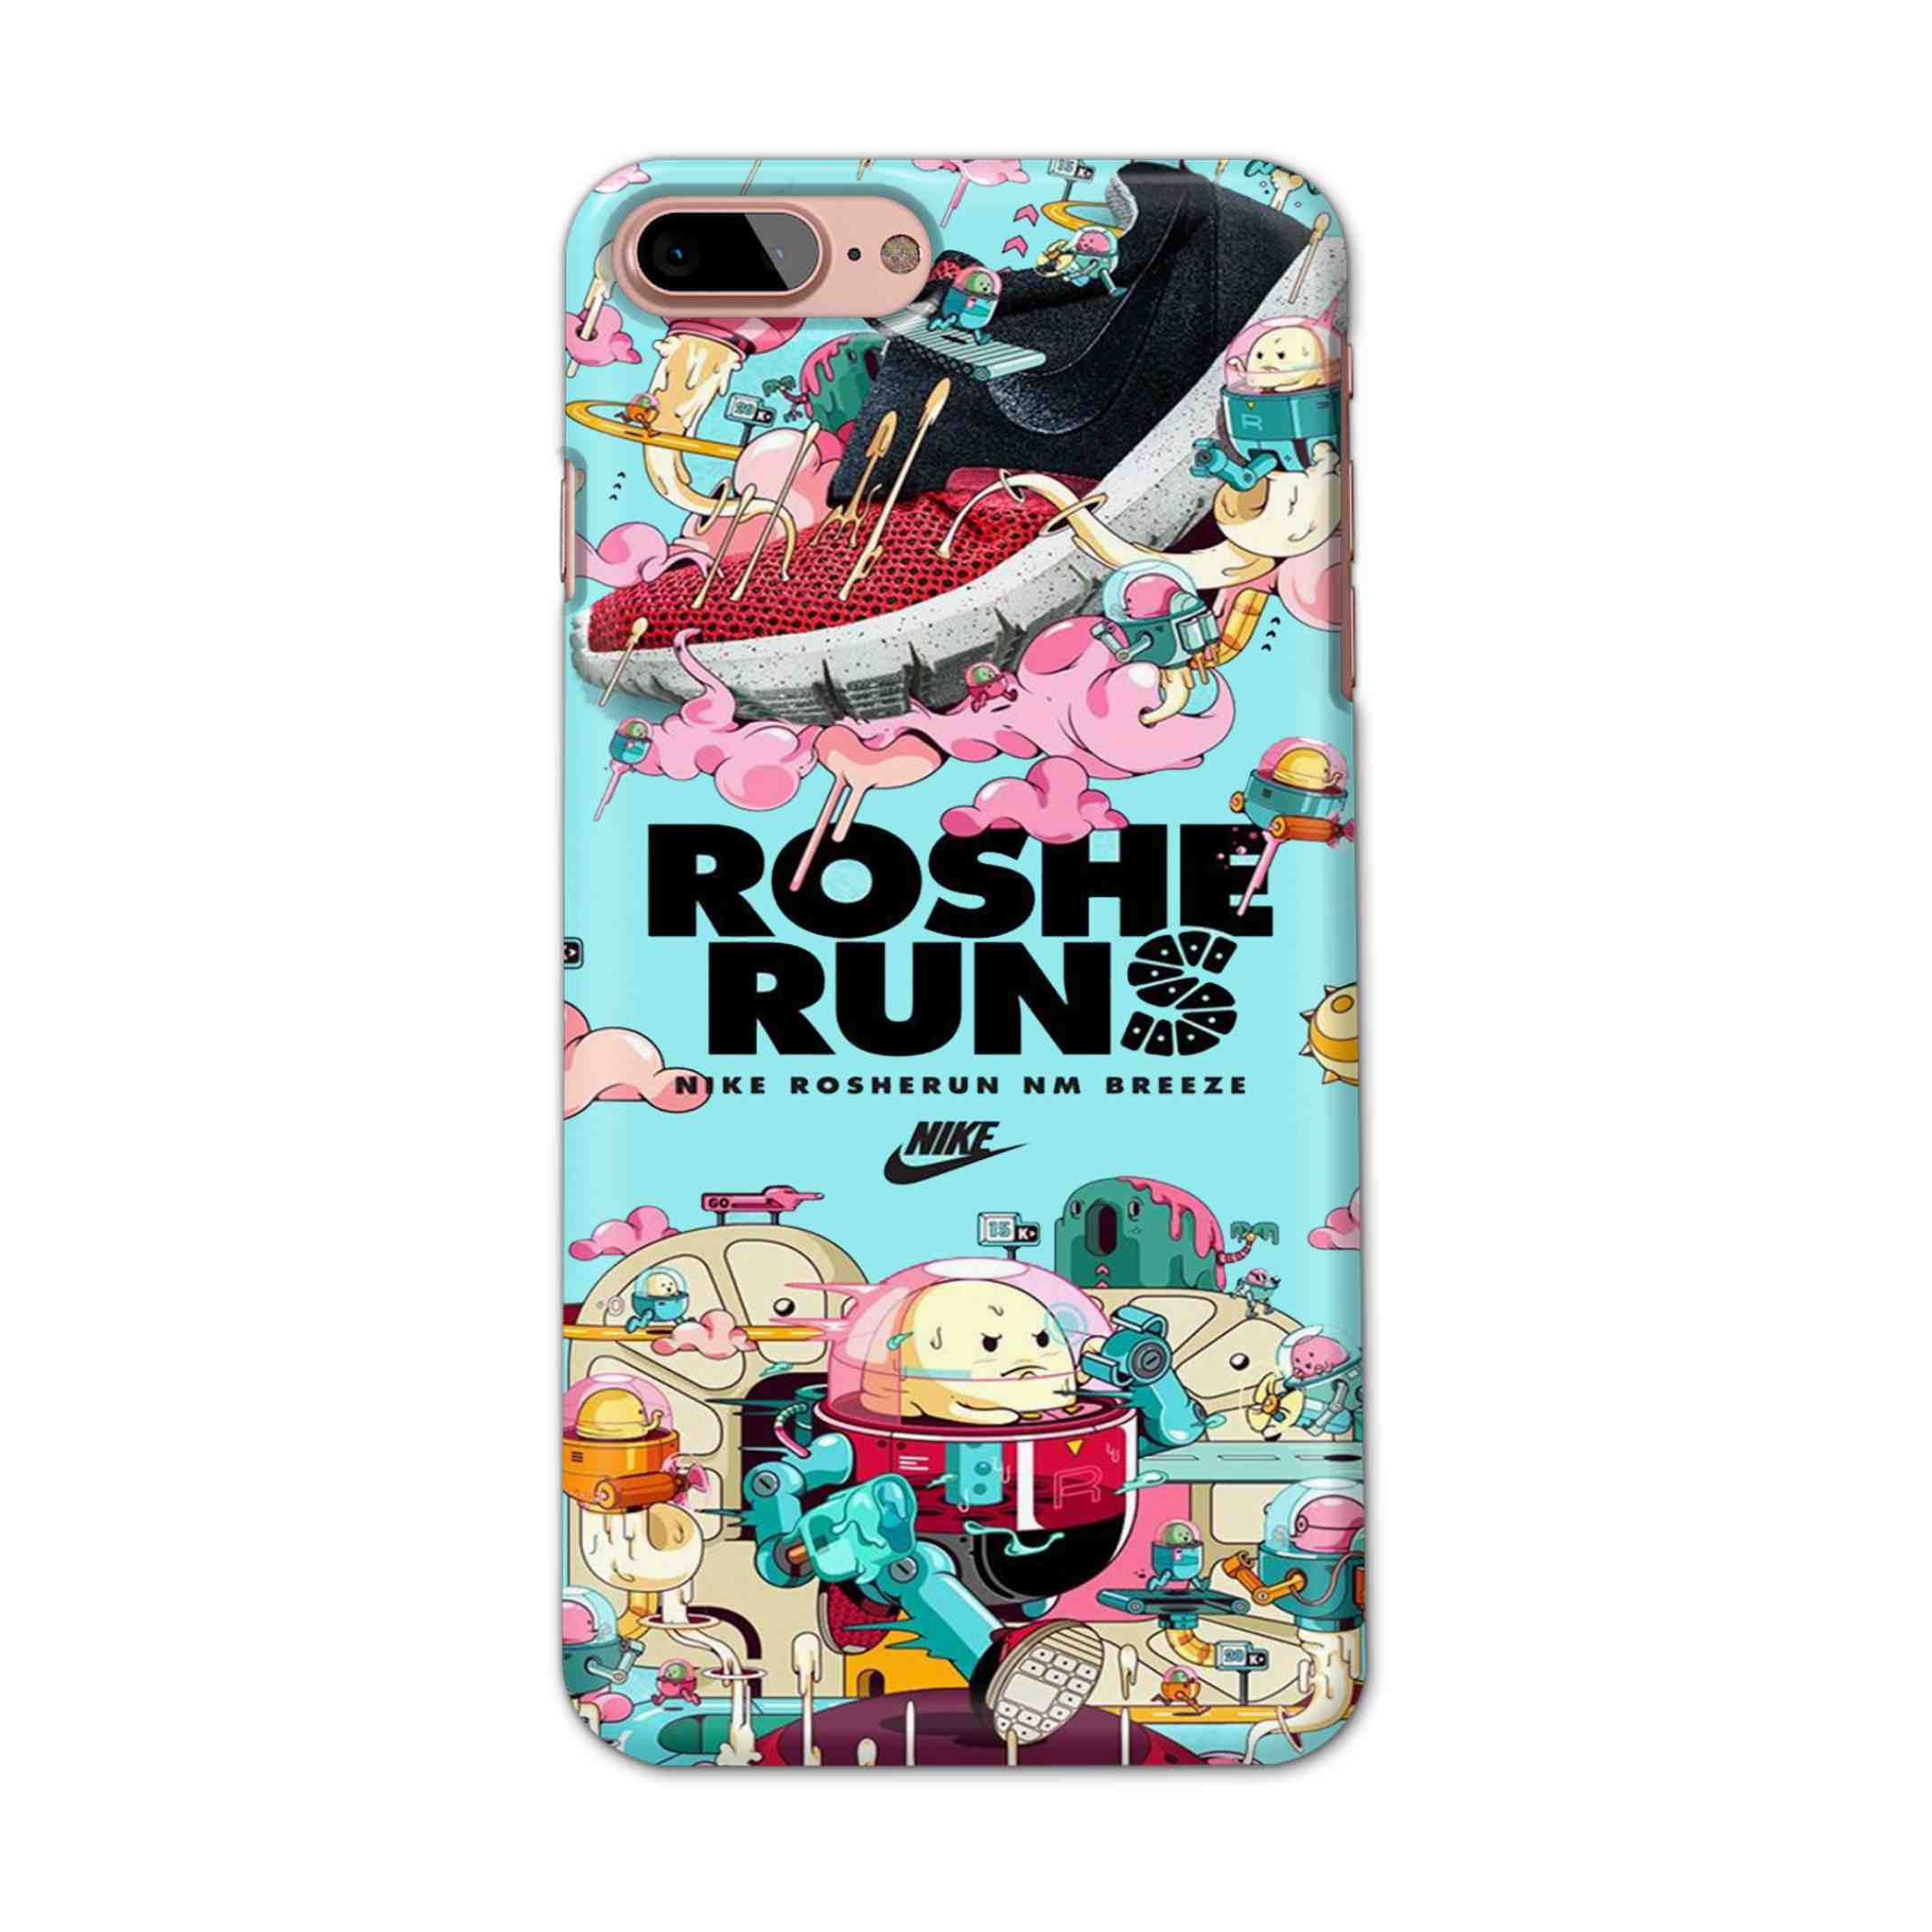 Buy Roshe Runs Hard Back Mobile Phone Case/Cover For iPhone 7 Plus / 8 Plus Online